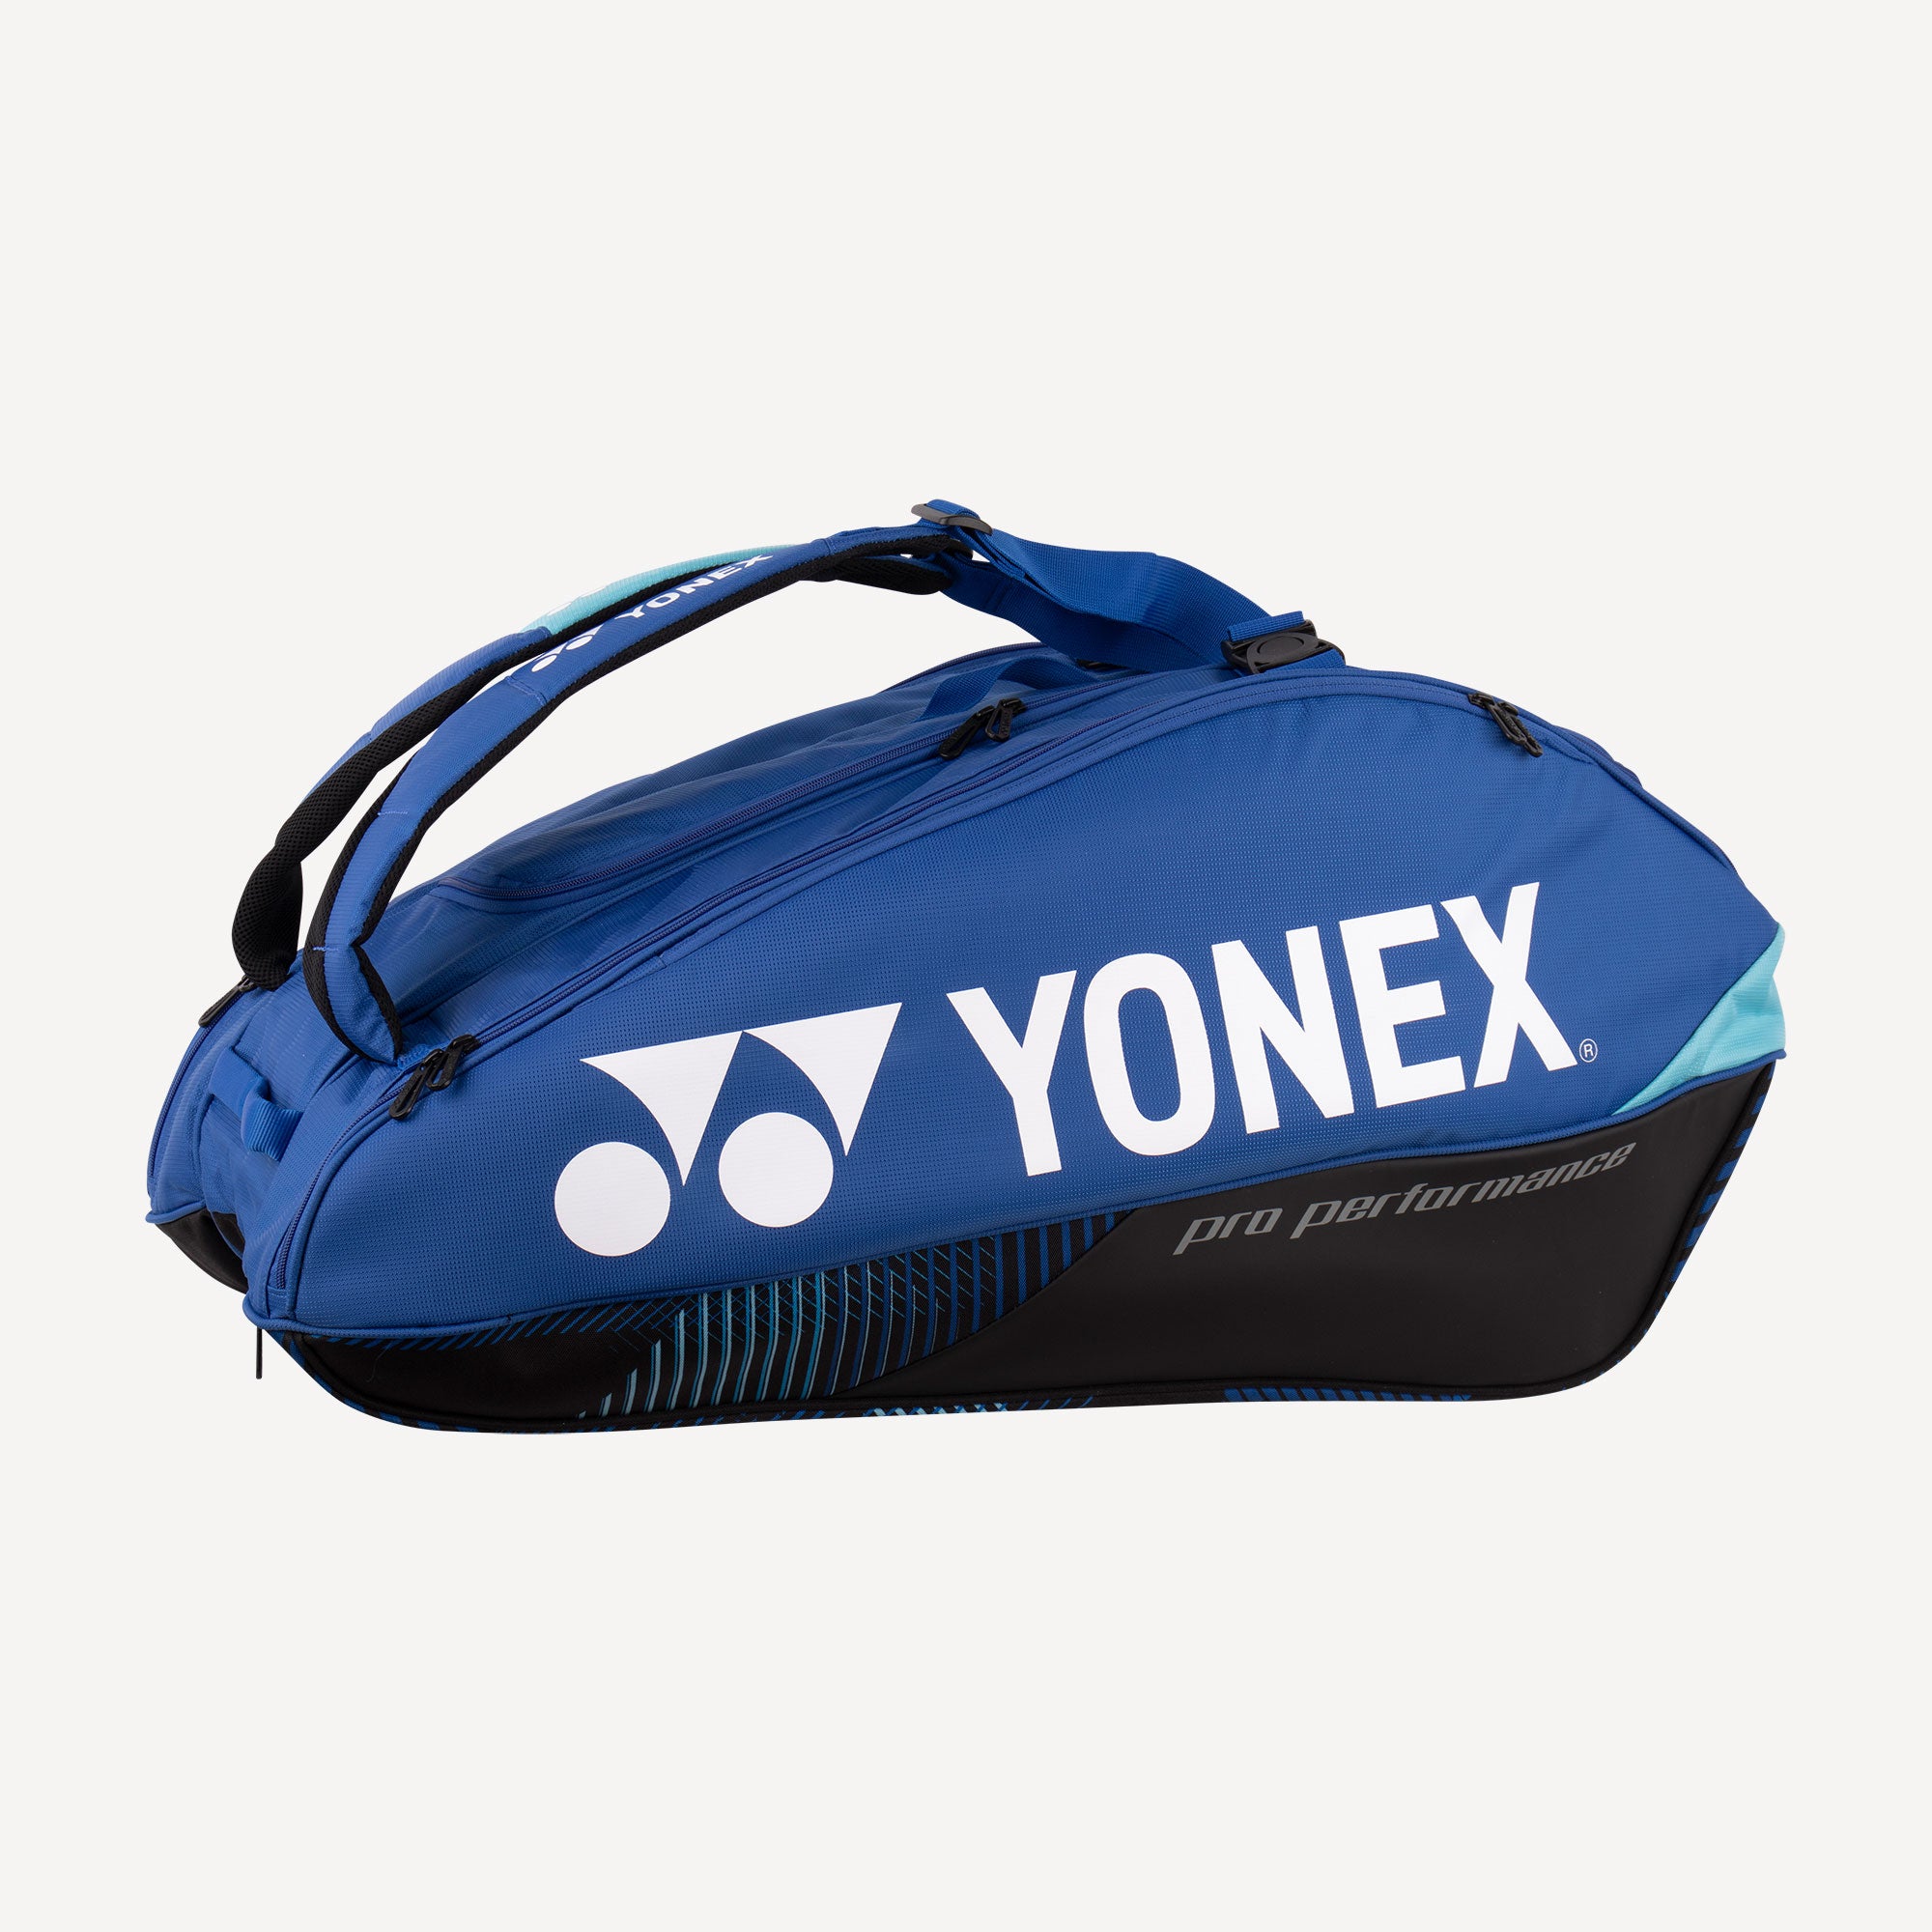 Yonex Pro 9 Racket Tennis Bag - Blue (1)